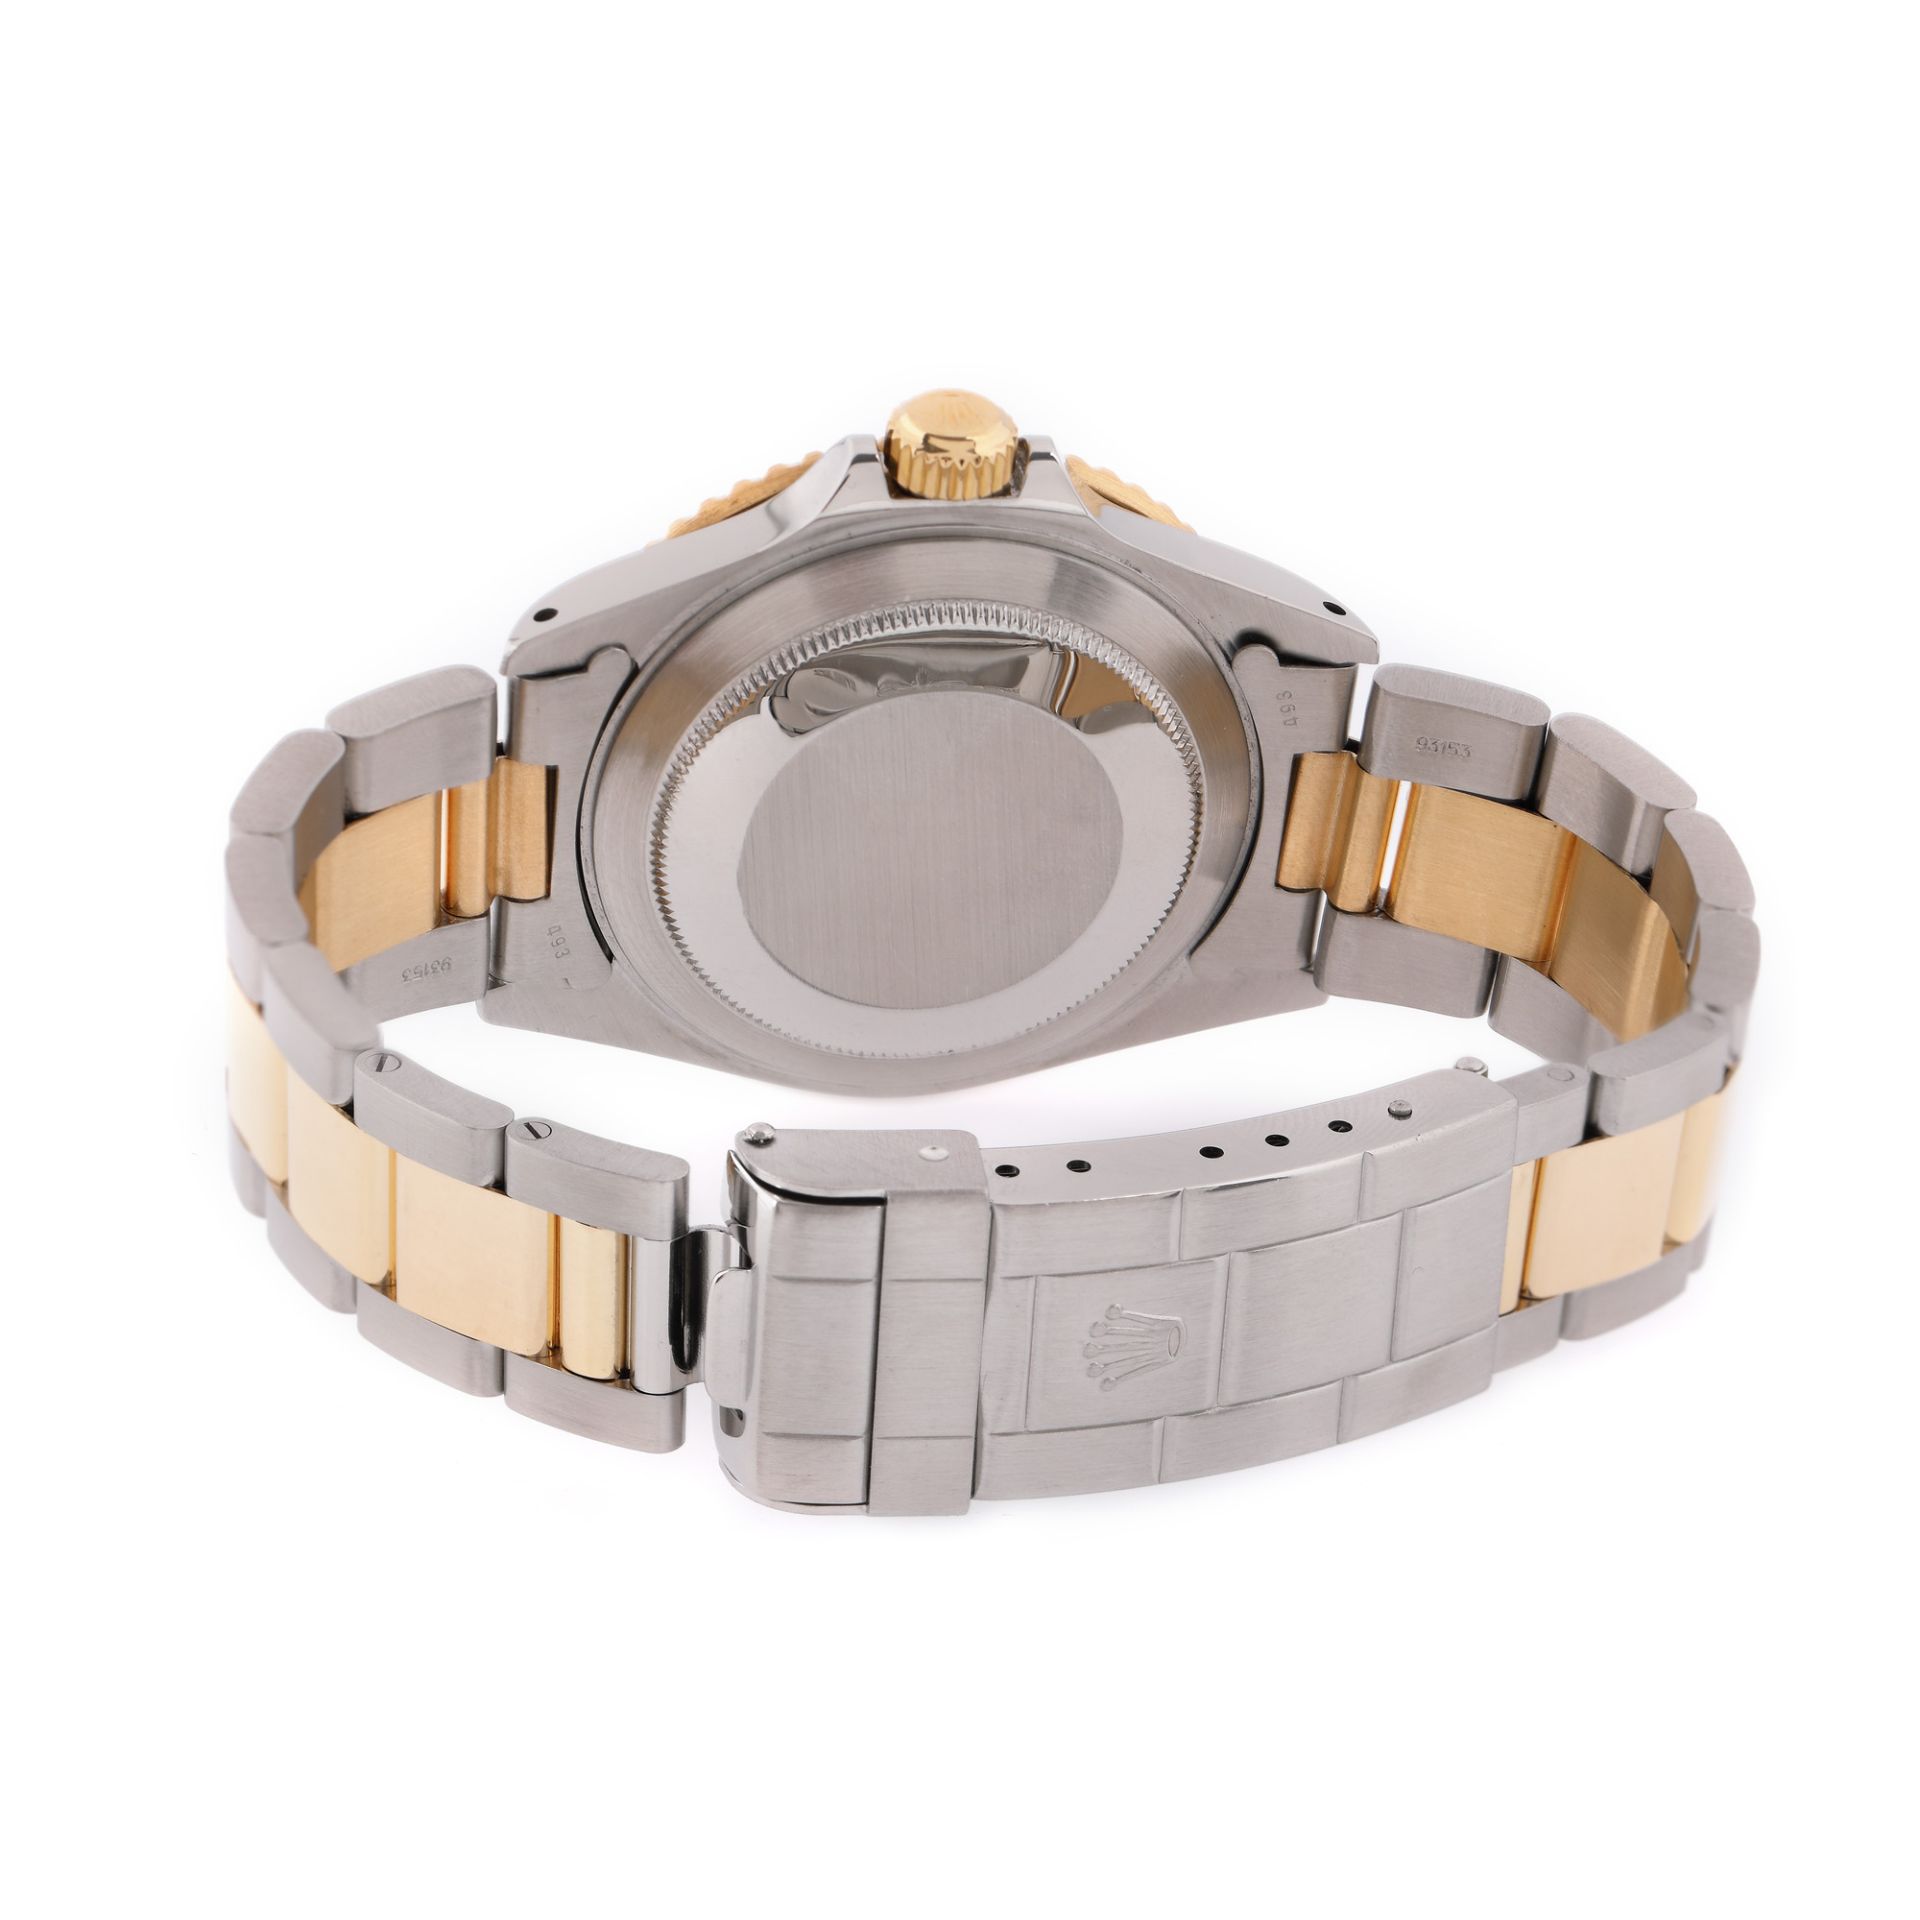 Rolex Submariner wristwatch, gold and steel, men - Image 3 of 3